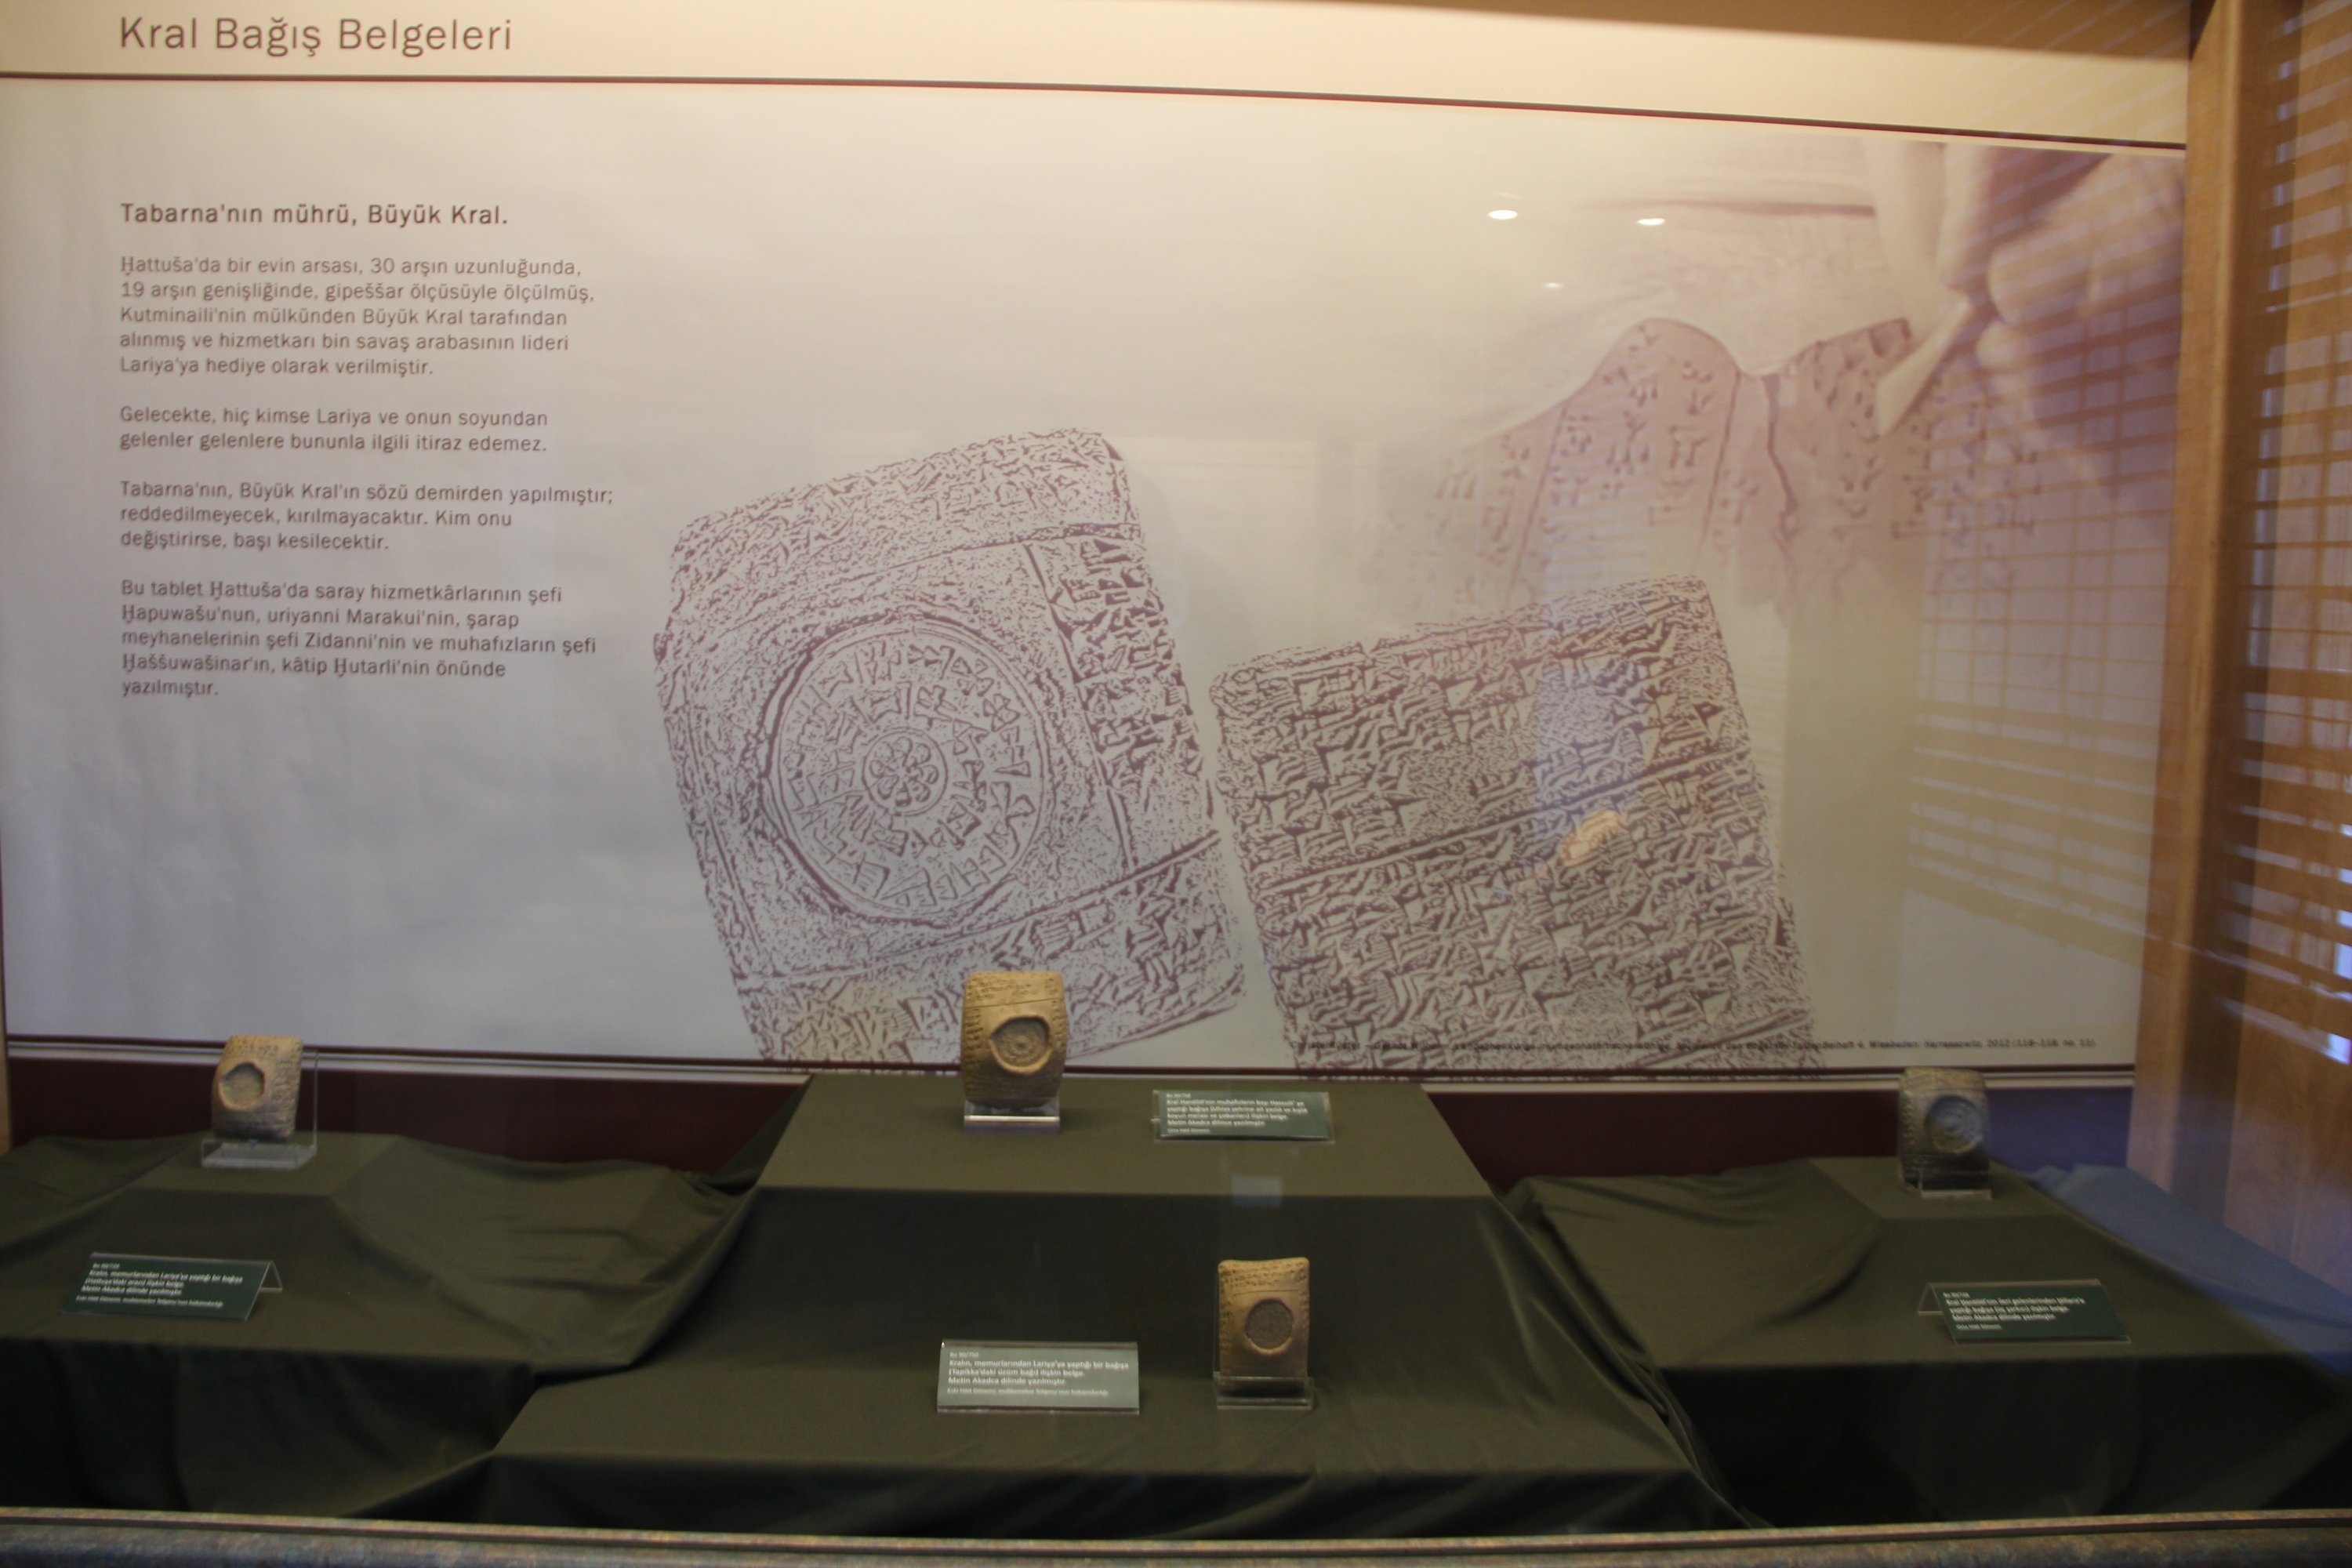 The clay tablets displayed in the museum, Çorum, Türkiye, Jan. 4, 2023. (IHA Photo)